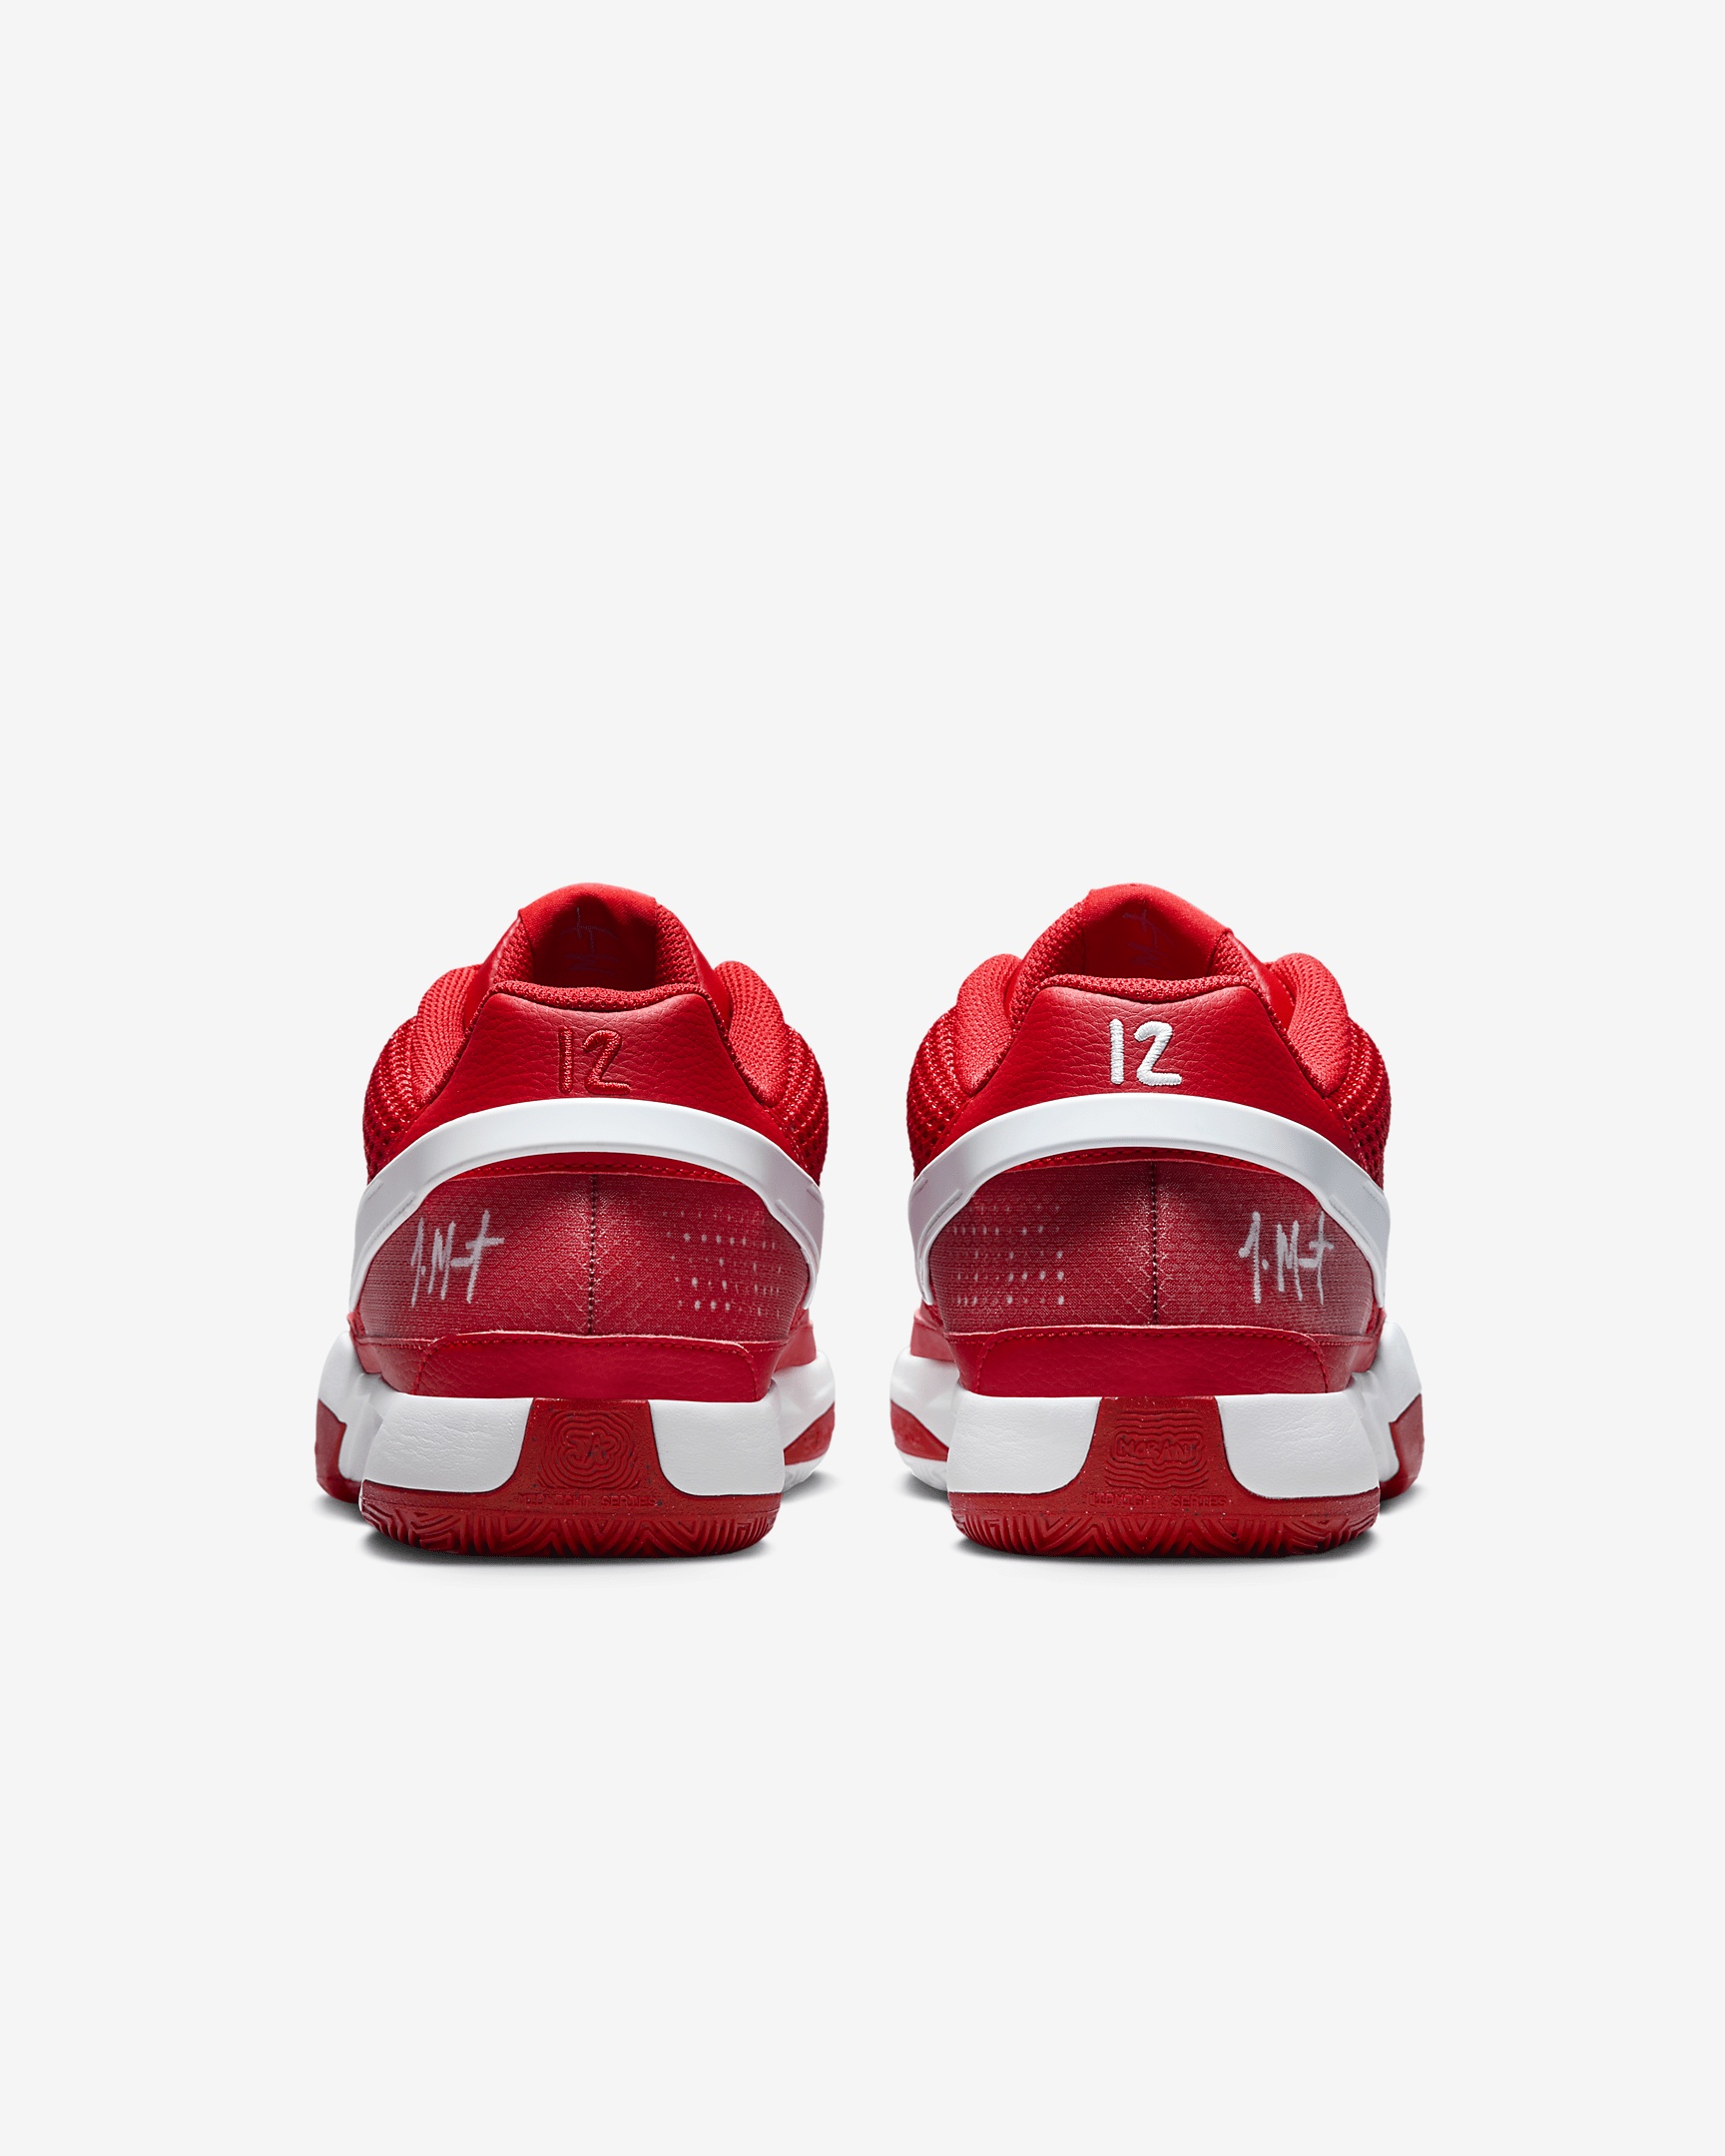 Ja 1 (Team Bank) Basketball Shoes - 6